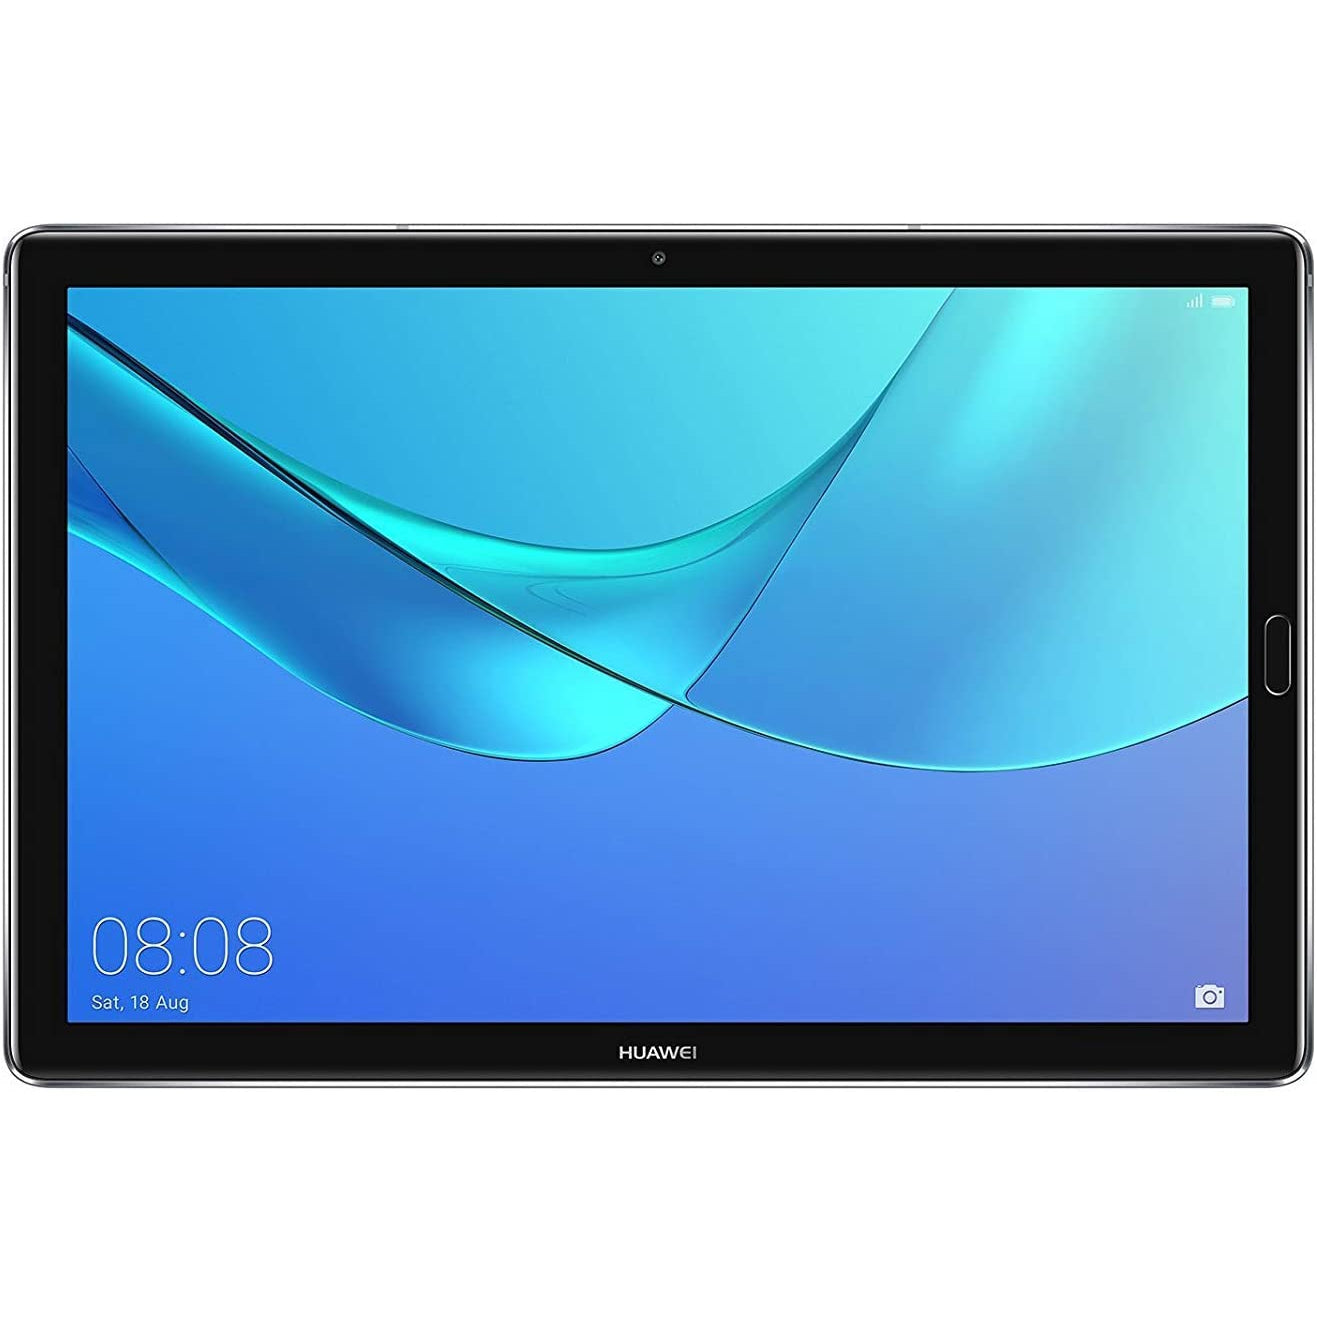 Huawei Mediapad M5 10” CMR-W09 Tablet Octa-Core 4 GB RAM 32GB 2K IPS Screen - Grey